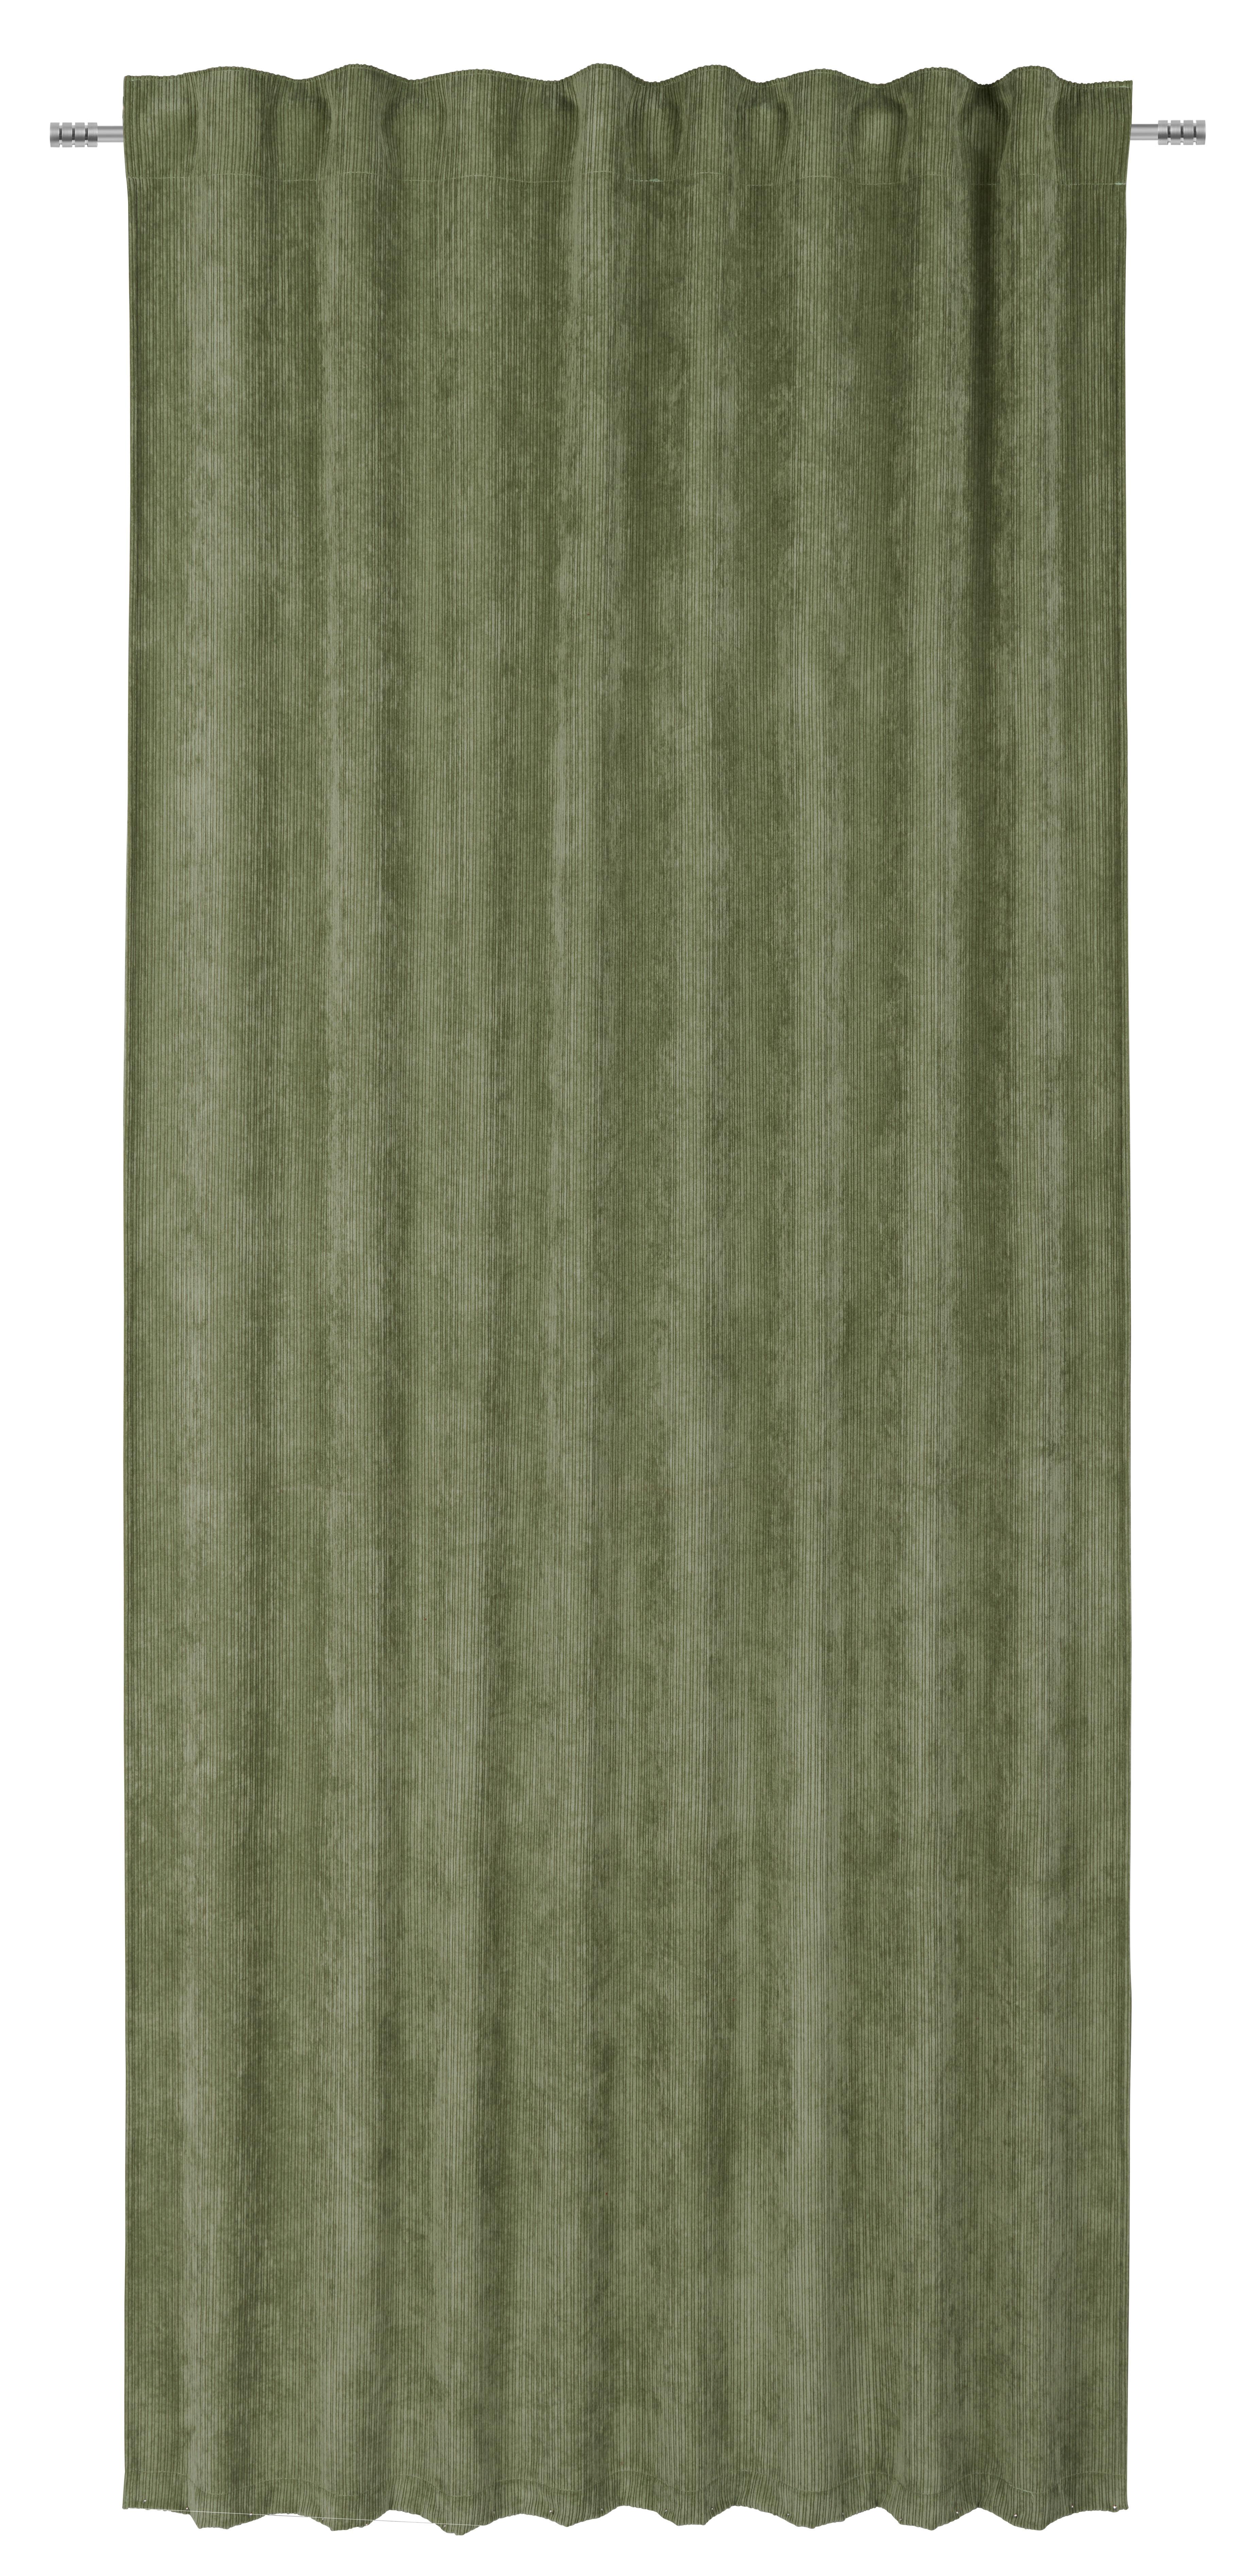 Končana Zavesa Corinna - zelena, Moderno, tekstil (135/245cm) - Premium Living